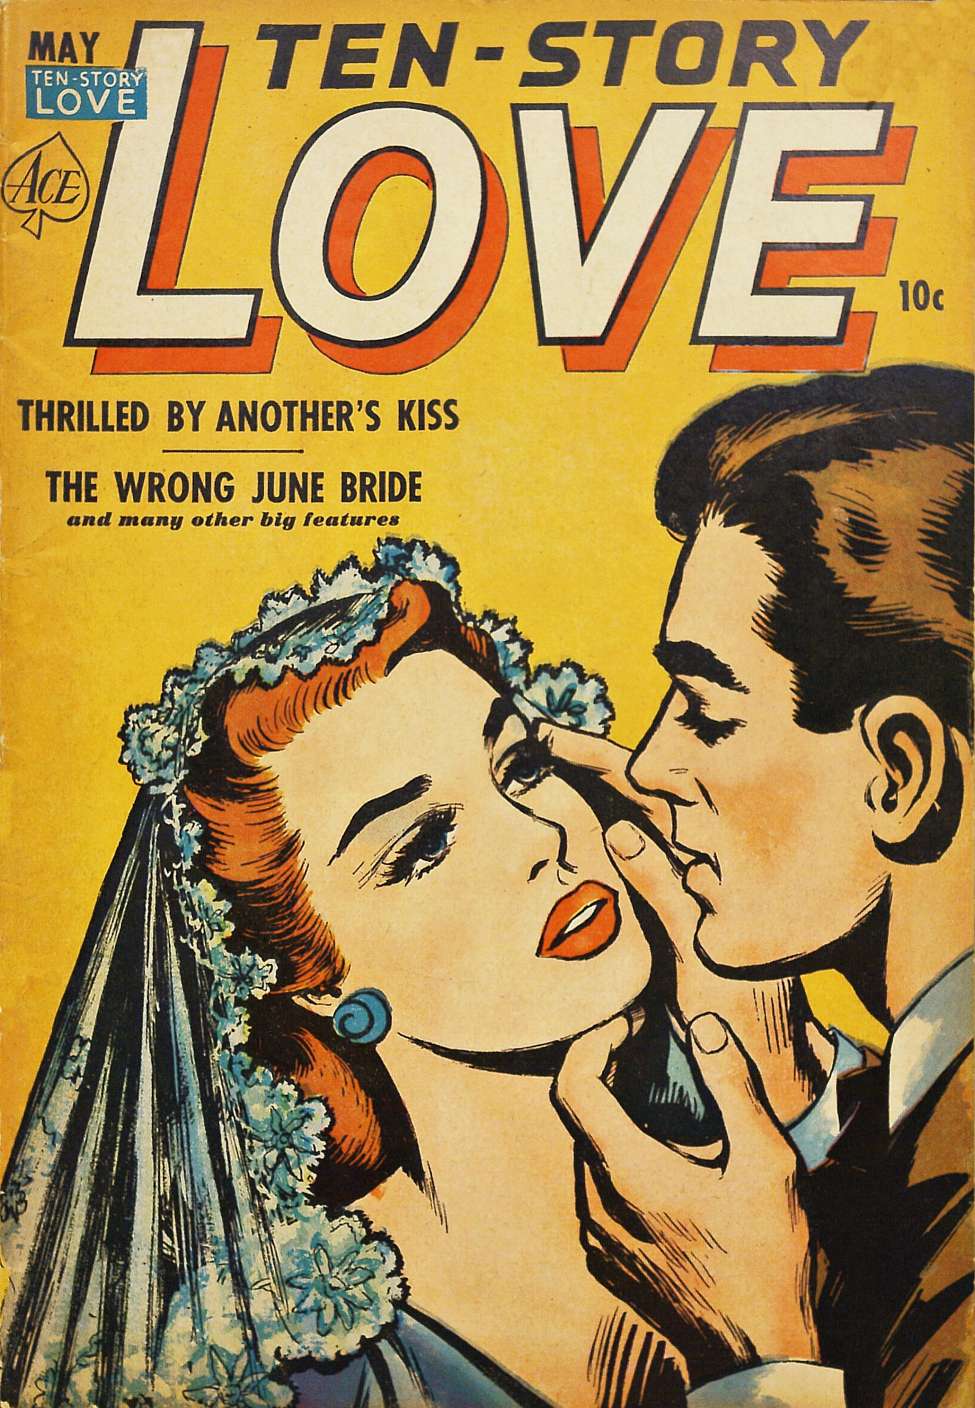 Comic Book Cover For Ten-Story Love v30 2 (182)